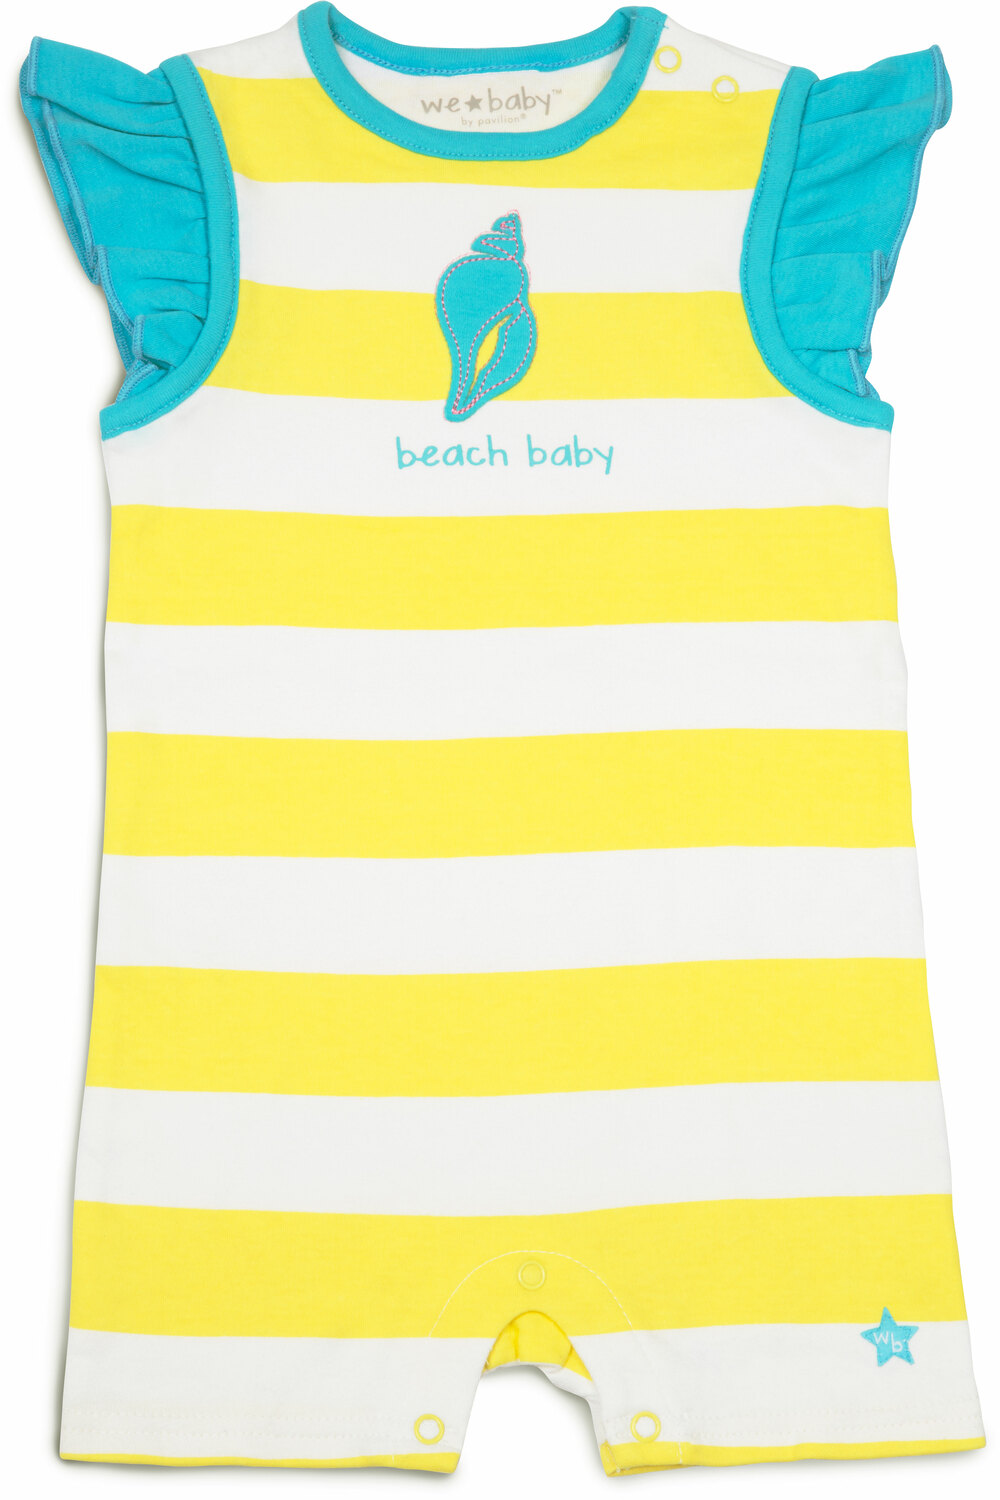 Beach Baby by We Baby - Beach Baby - 12-24 Month Girl Romper